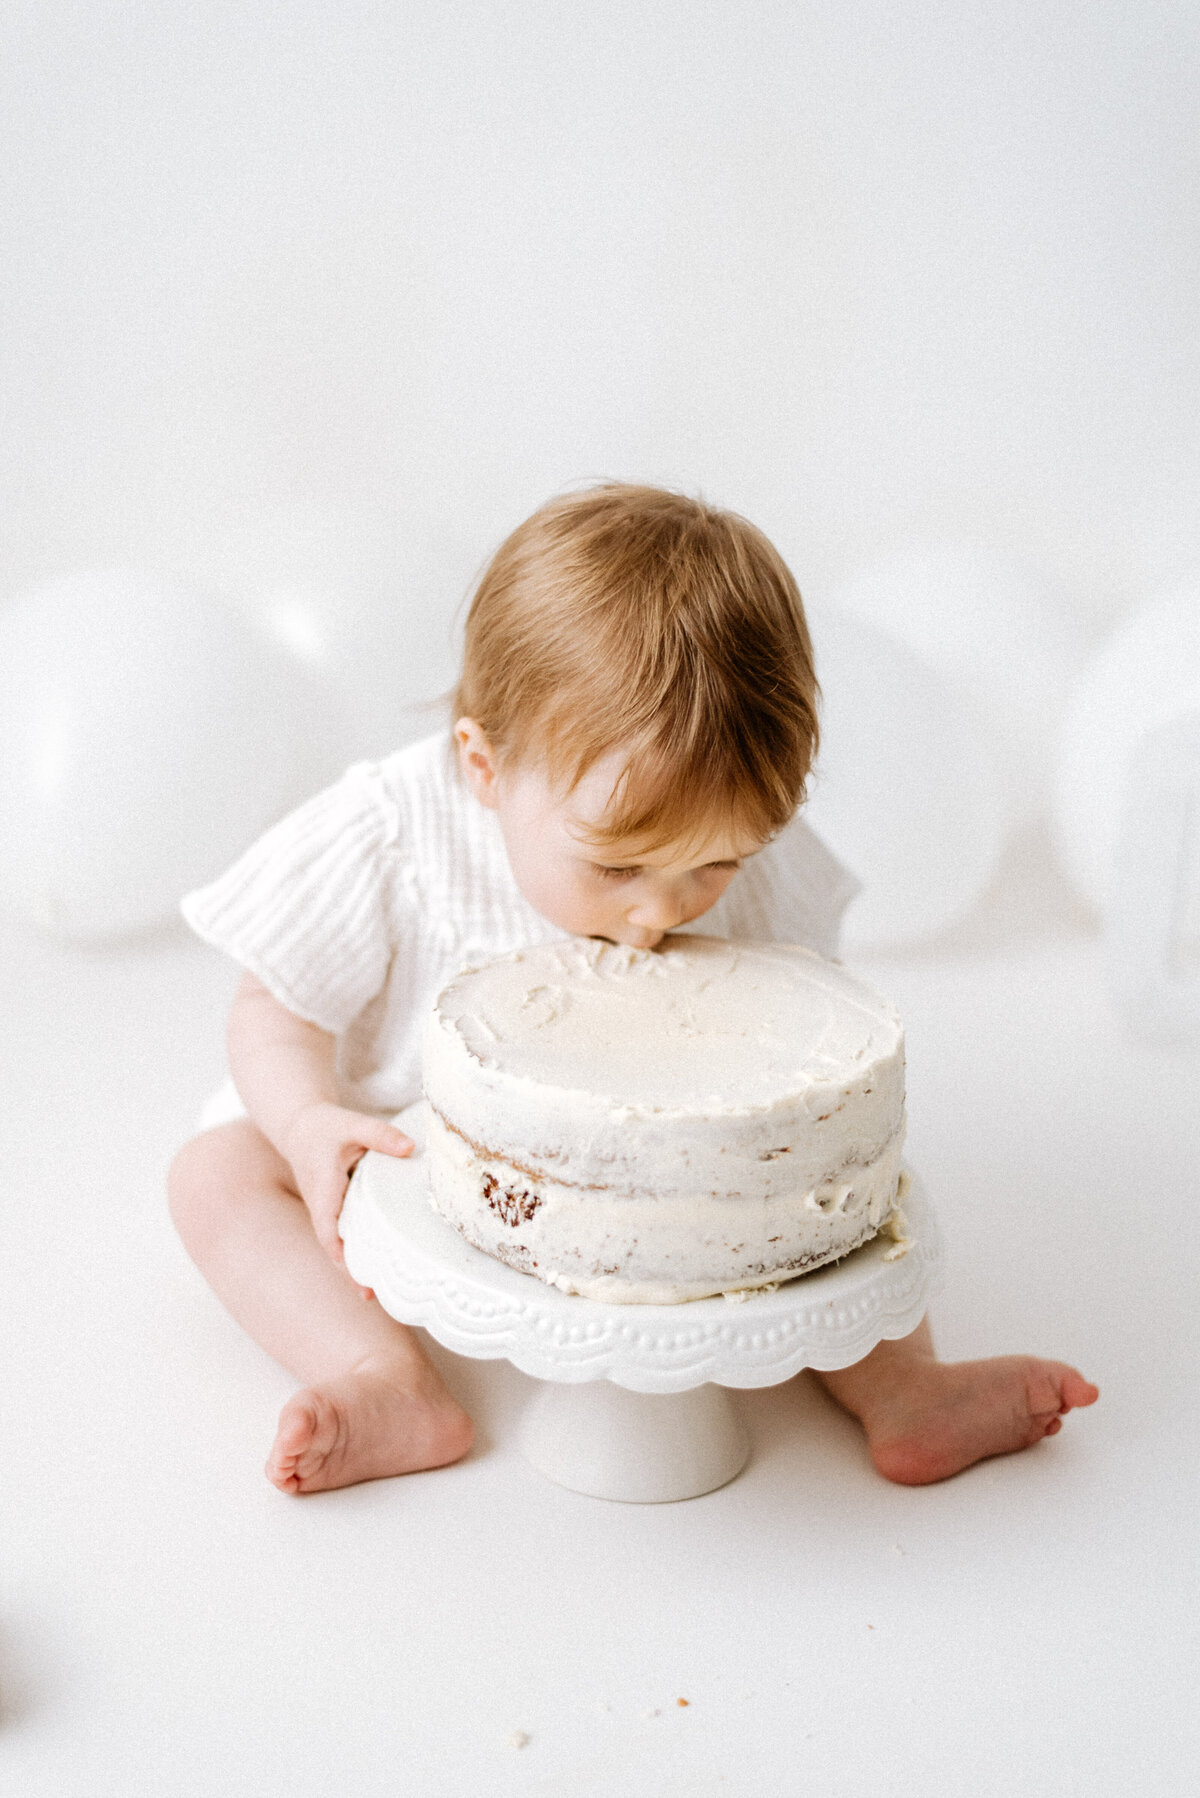 Baby eating a cake in cake smash photoshoot in billingshurst